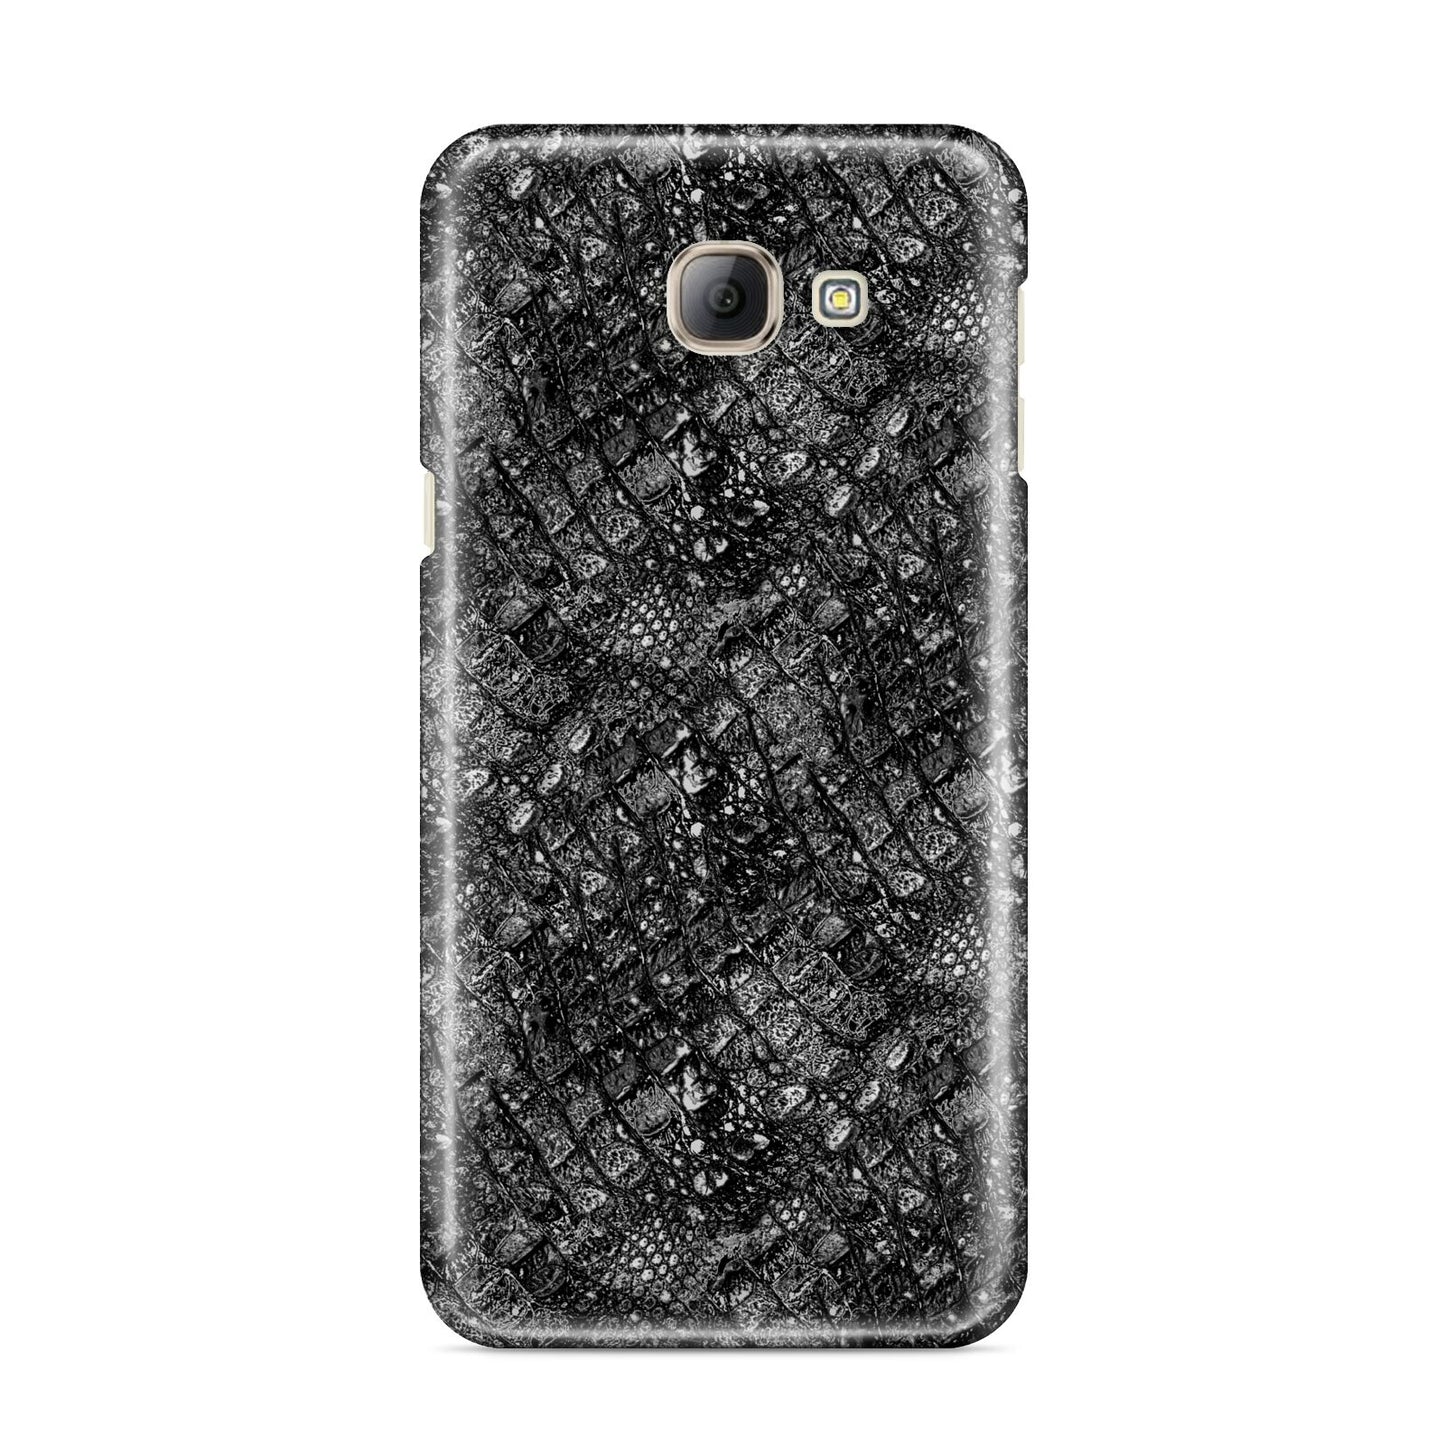 Snakeskin Design Samsung Galaxy A8 2016 Case